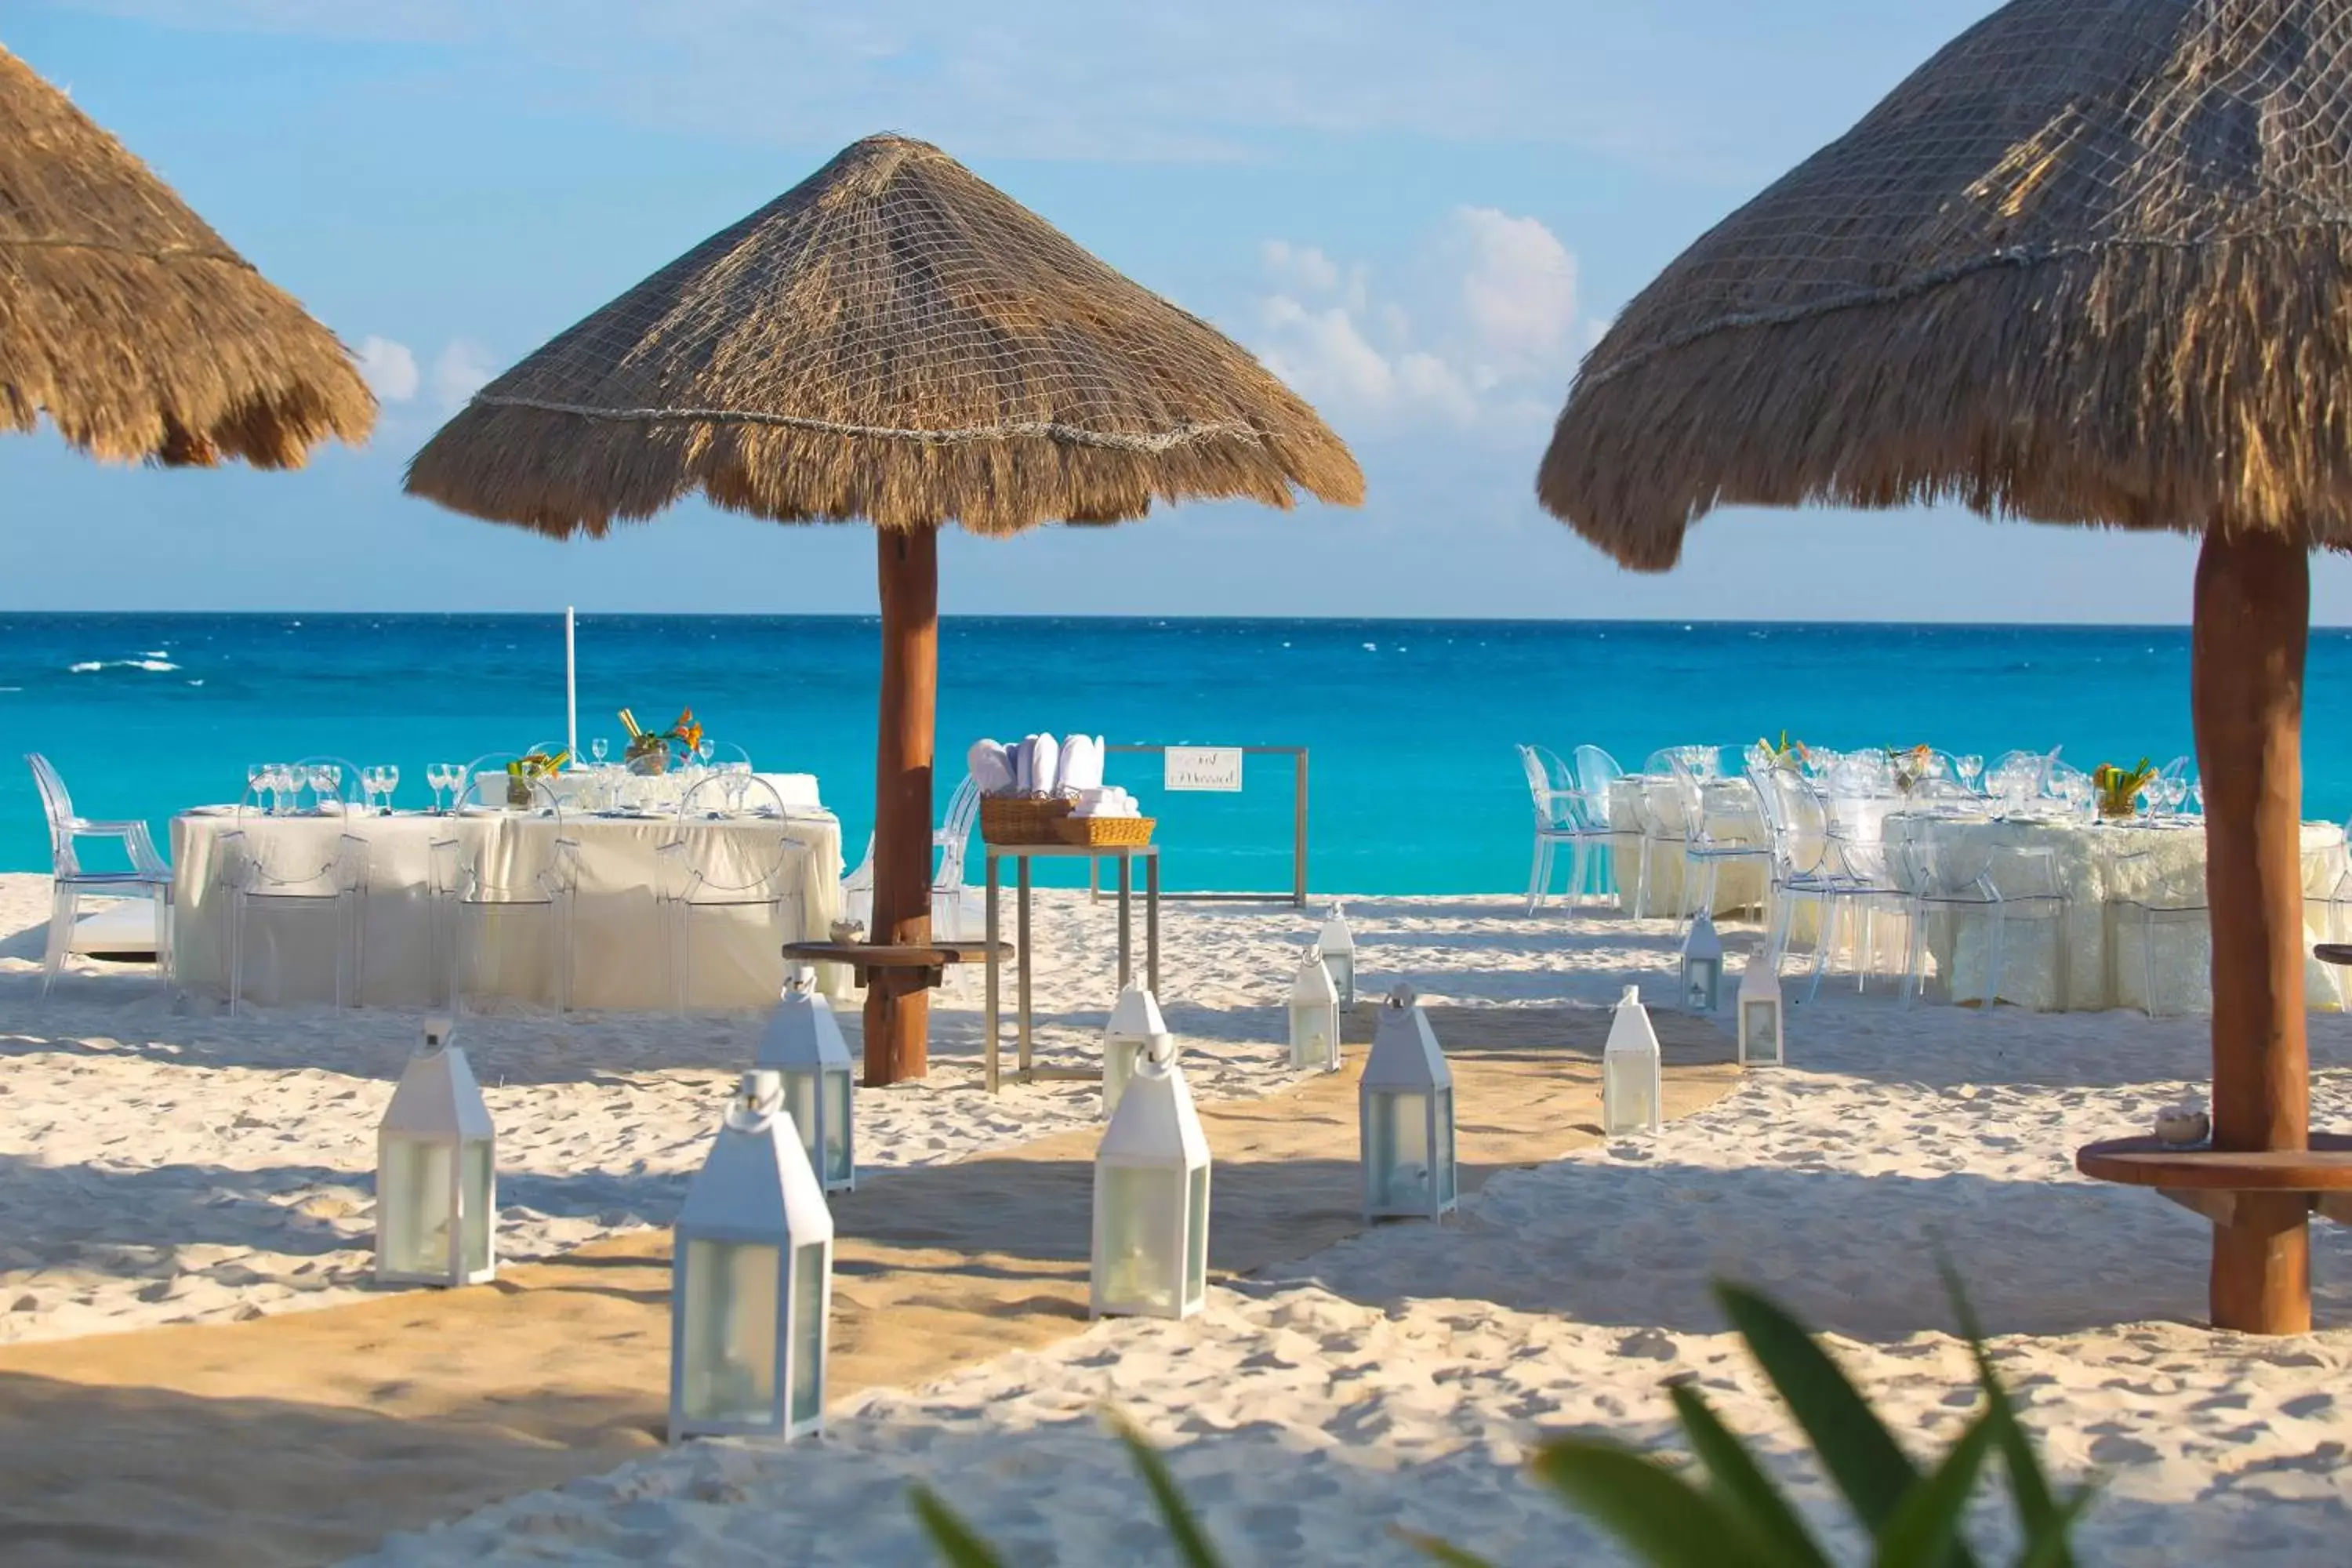 Banquet/Function facilities, Banquet Facilities in Krystal Grand Cancun